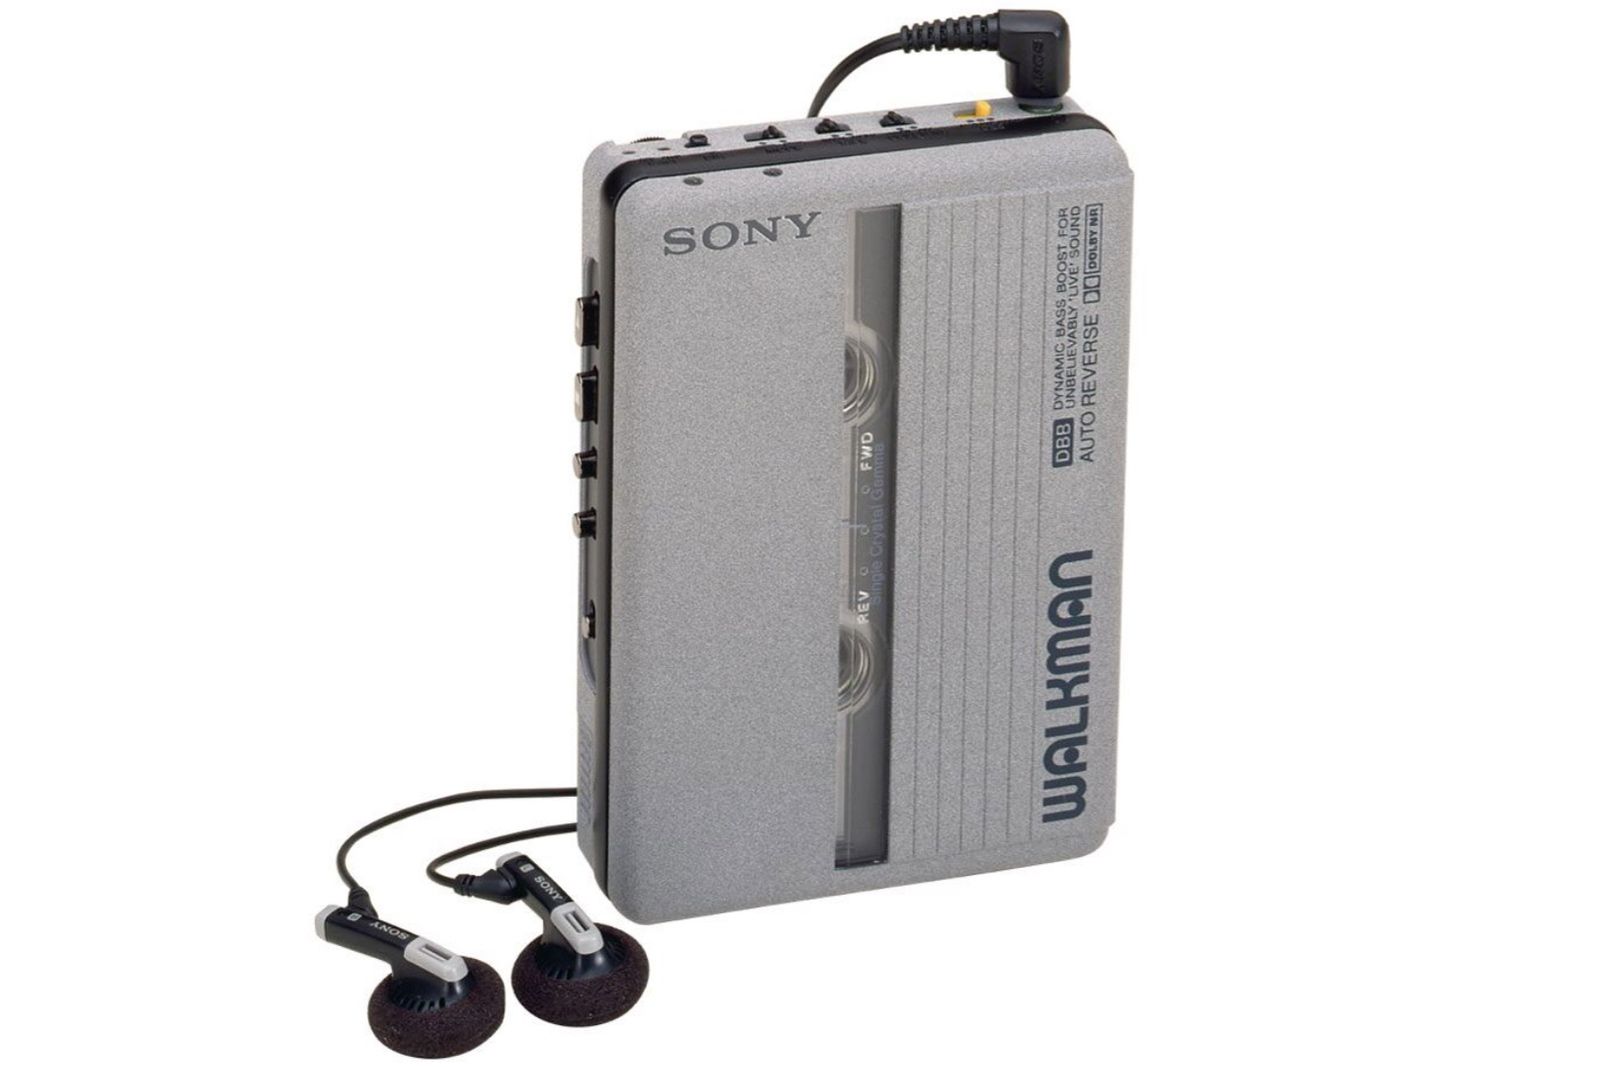 SONY WM-22  Cosas antiguas, Audifonos, Retro